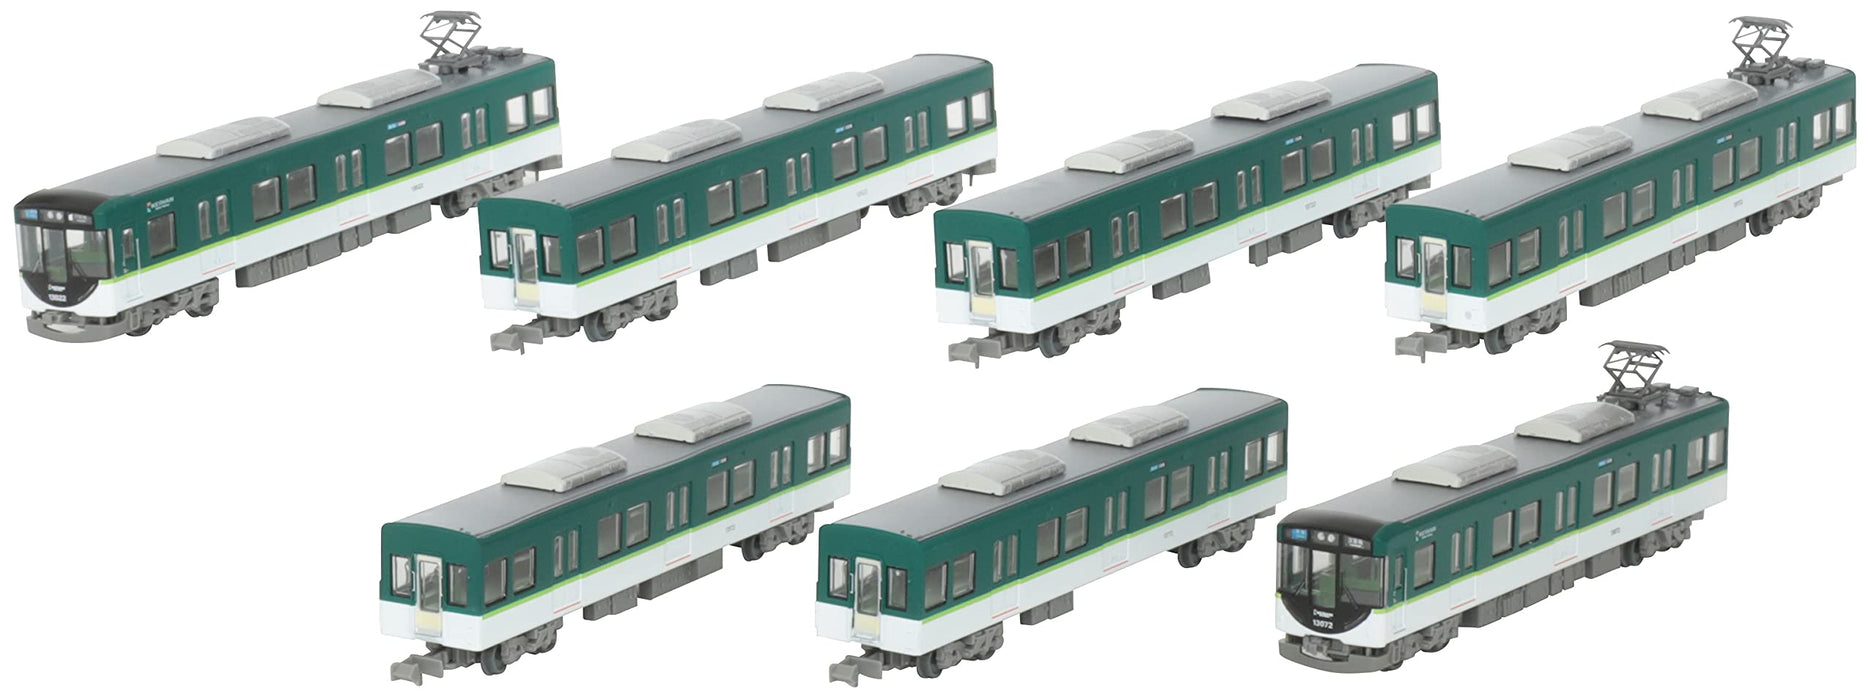 Tomytec Japan Railway Collection Keihan Electric Railway Series 13000 7 Car Set Diorama Supplies (1St Order Limited Production) 318309